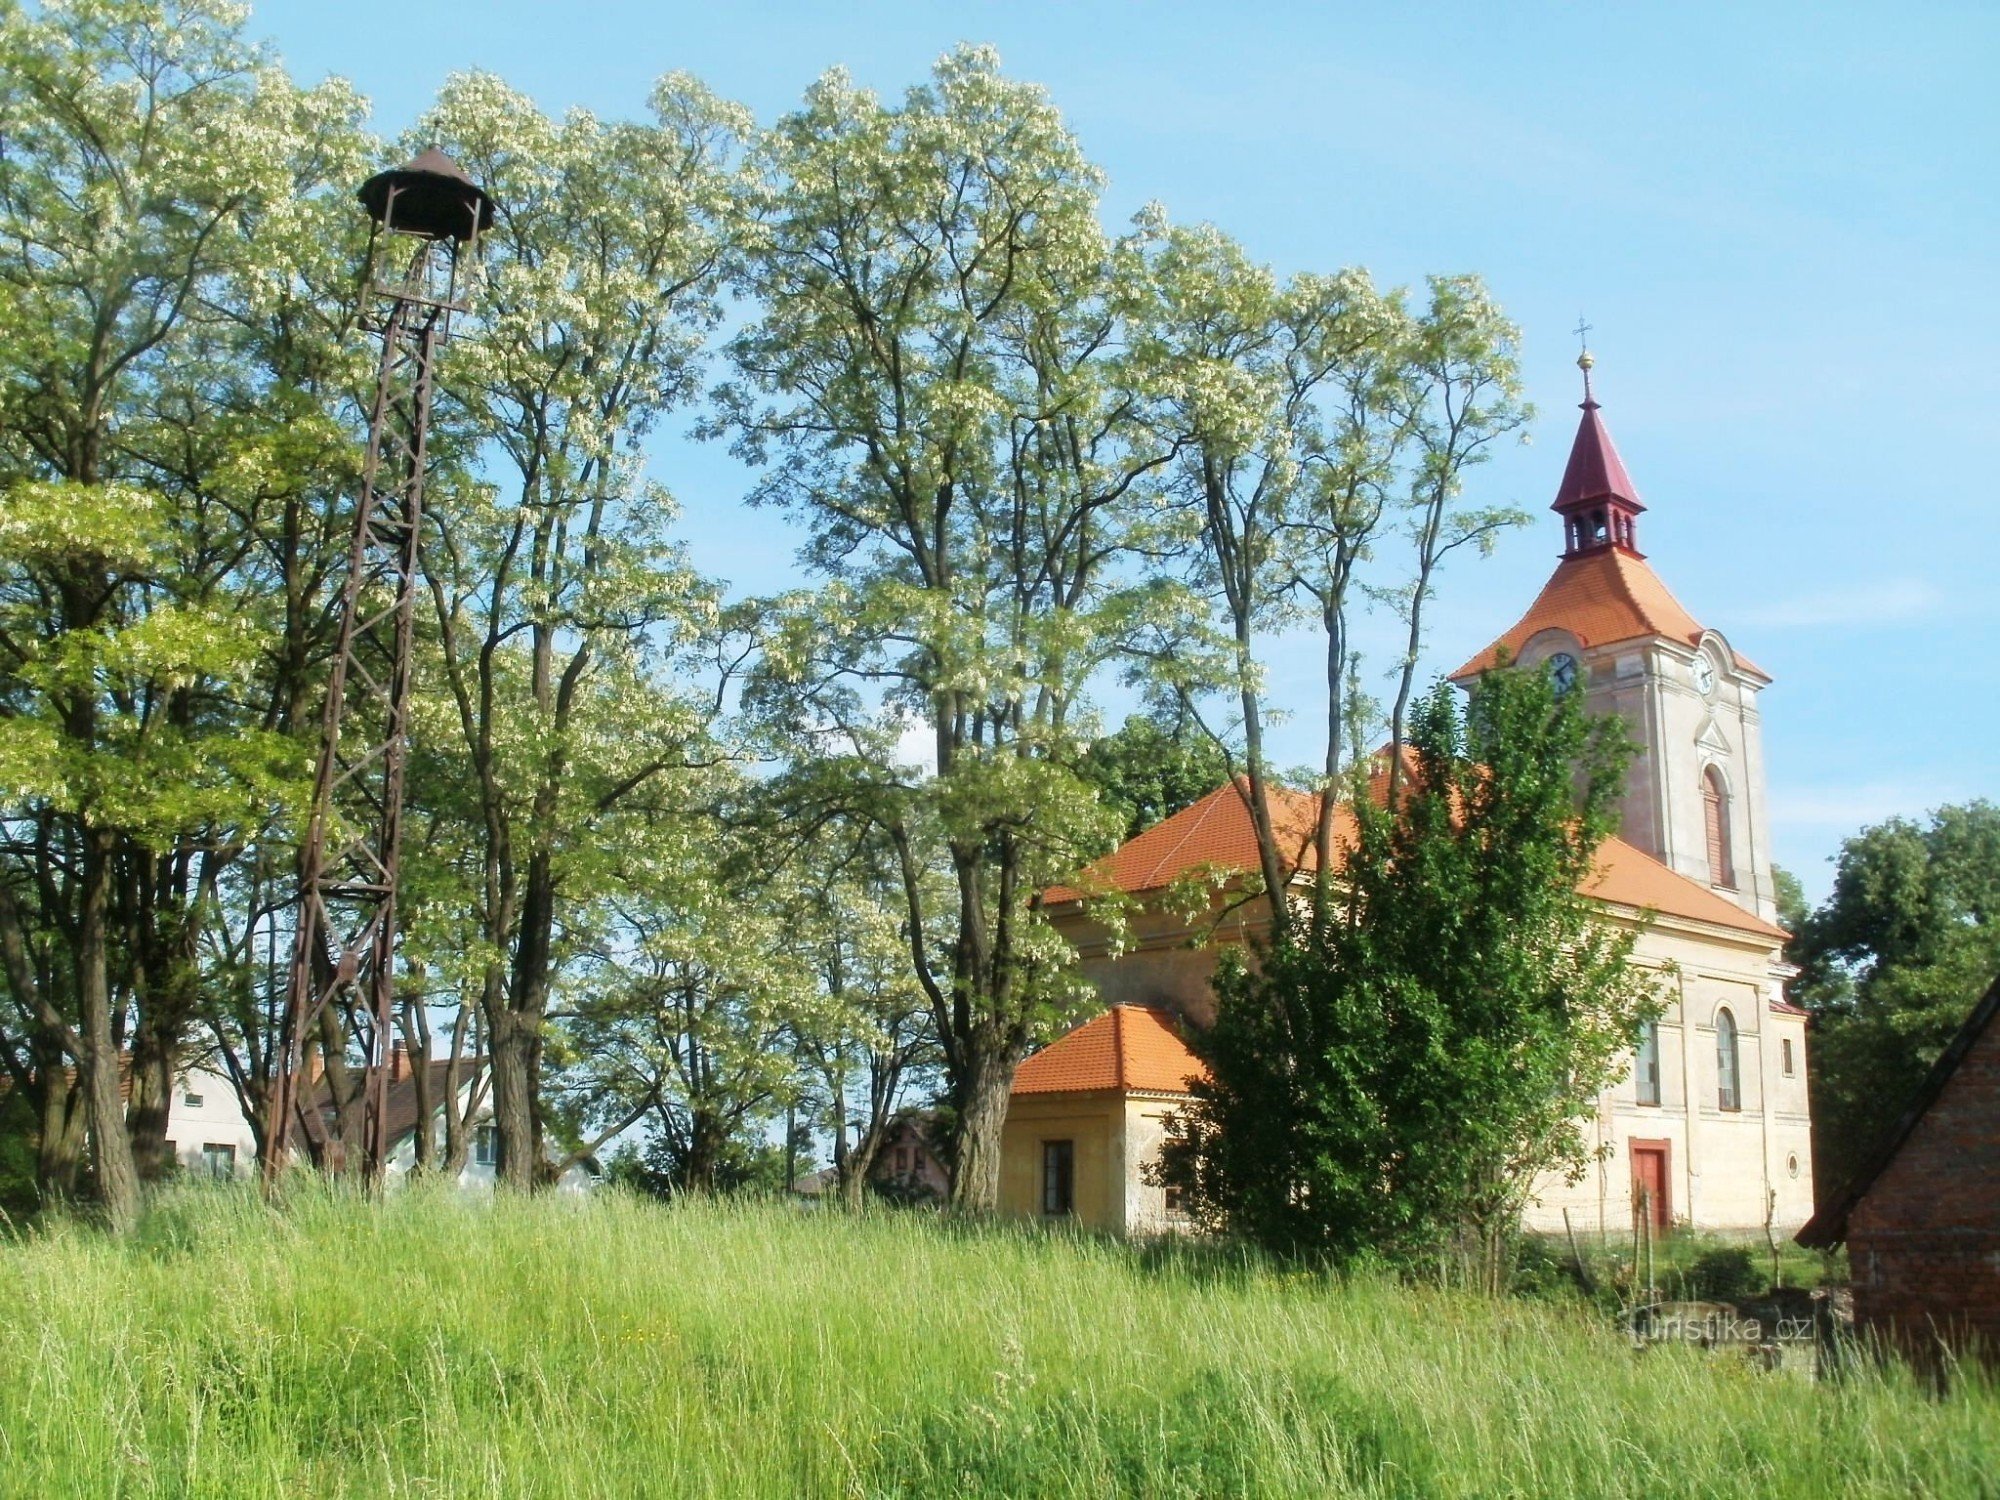 Jeníkovice - biserica Sf. Petru și Pavel